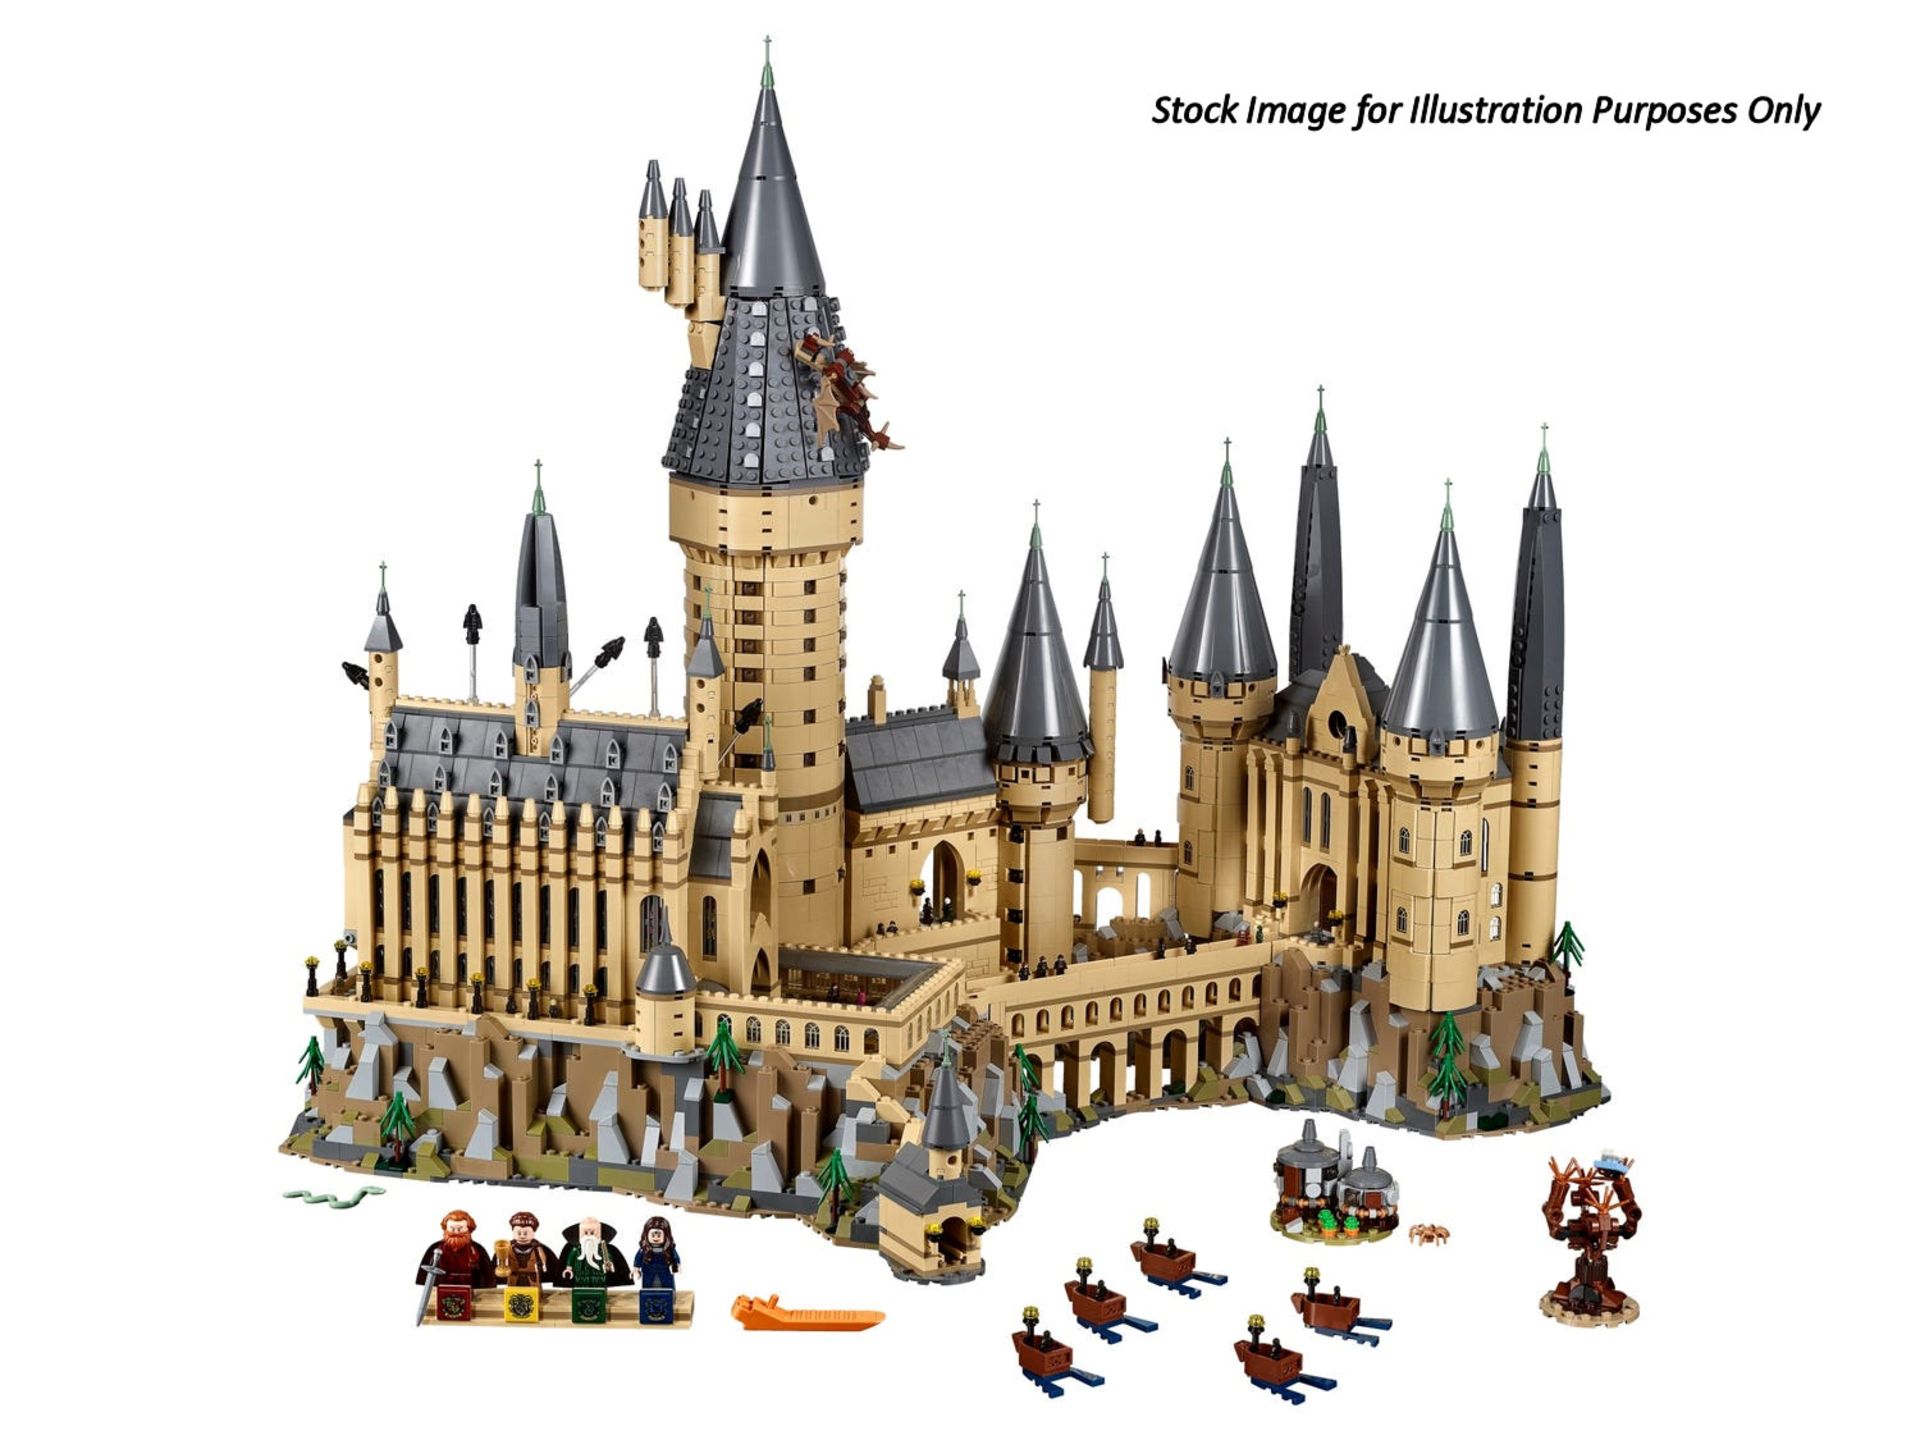 1 x Lego Harry Potter Hogwarts Castle - Set # 71043 - New/Boxed - JMCS136 - CL987 - Location: